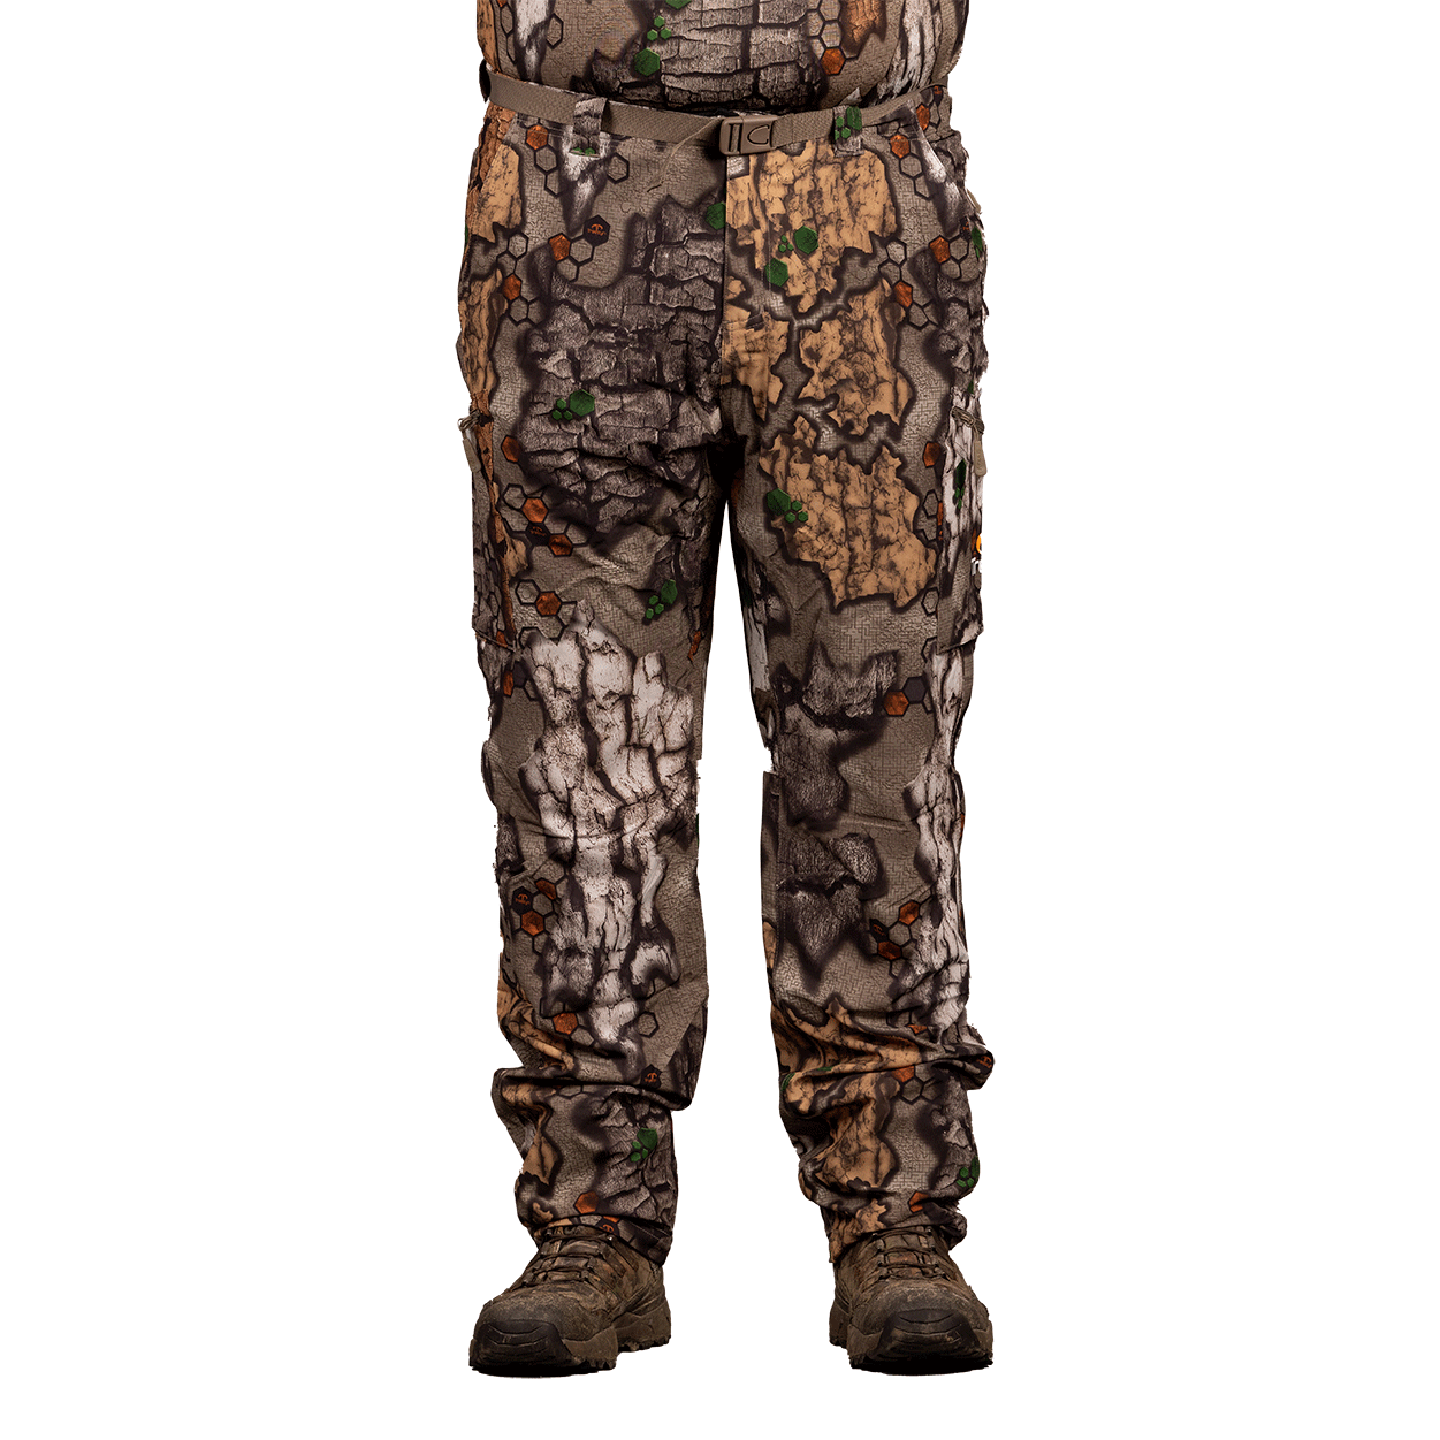 Hunting Pants,yeti/bear Camouflage Pants,hunting Clothes For Men 2021 - Buy  China Wholesale Hunting Pants $5